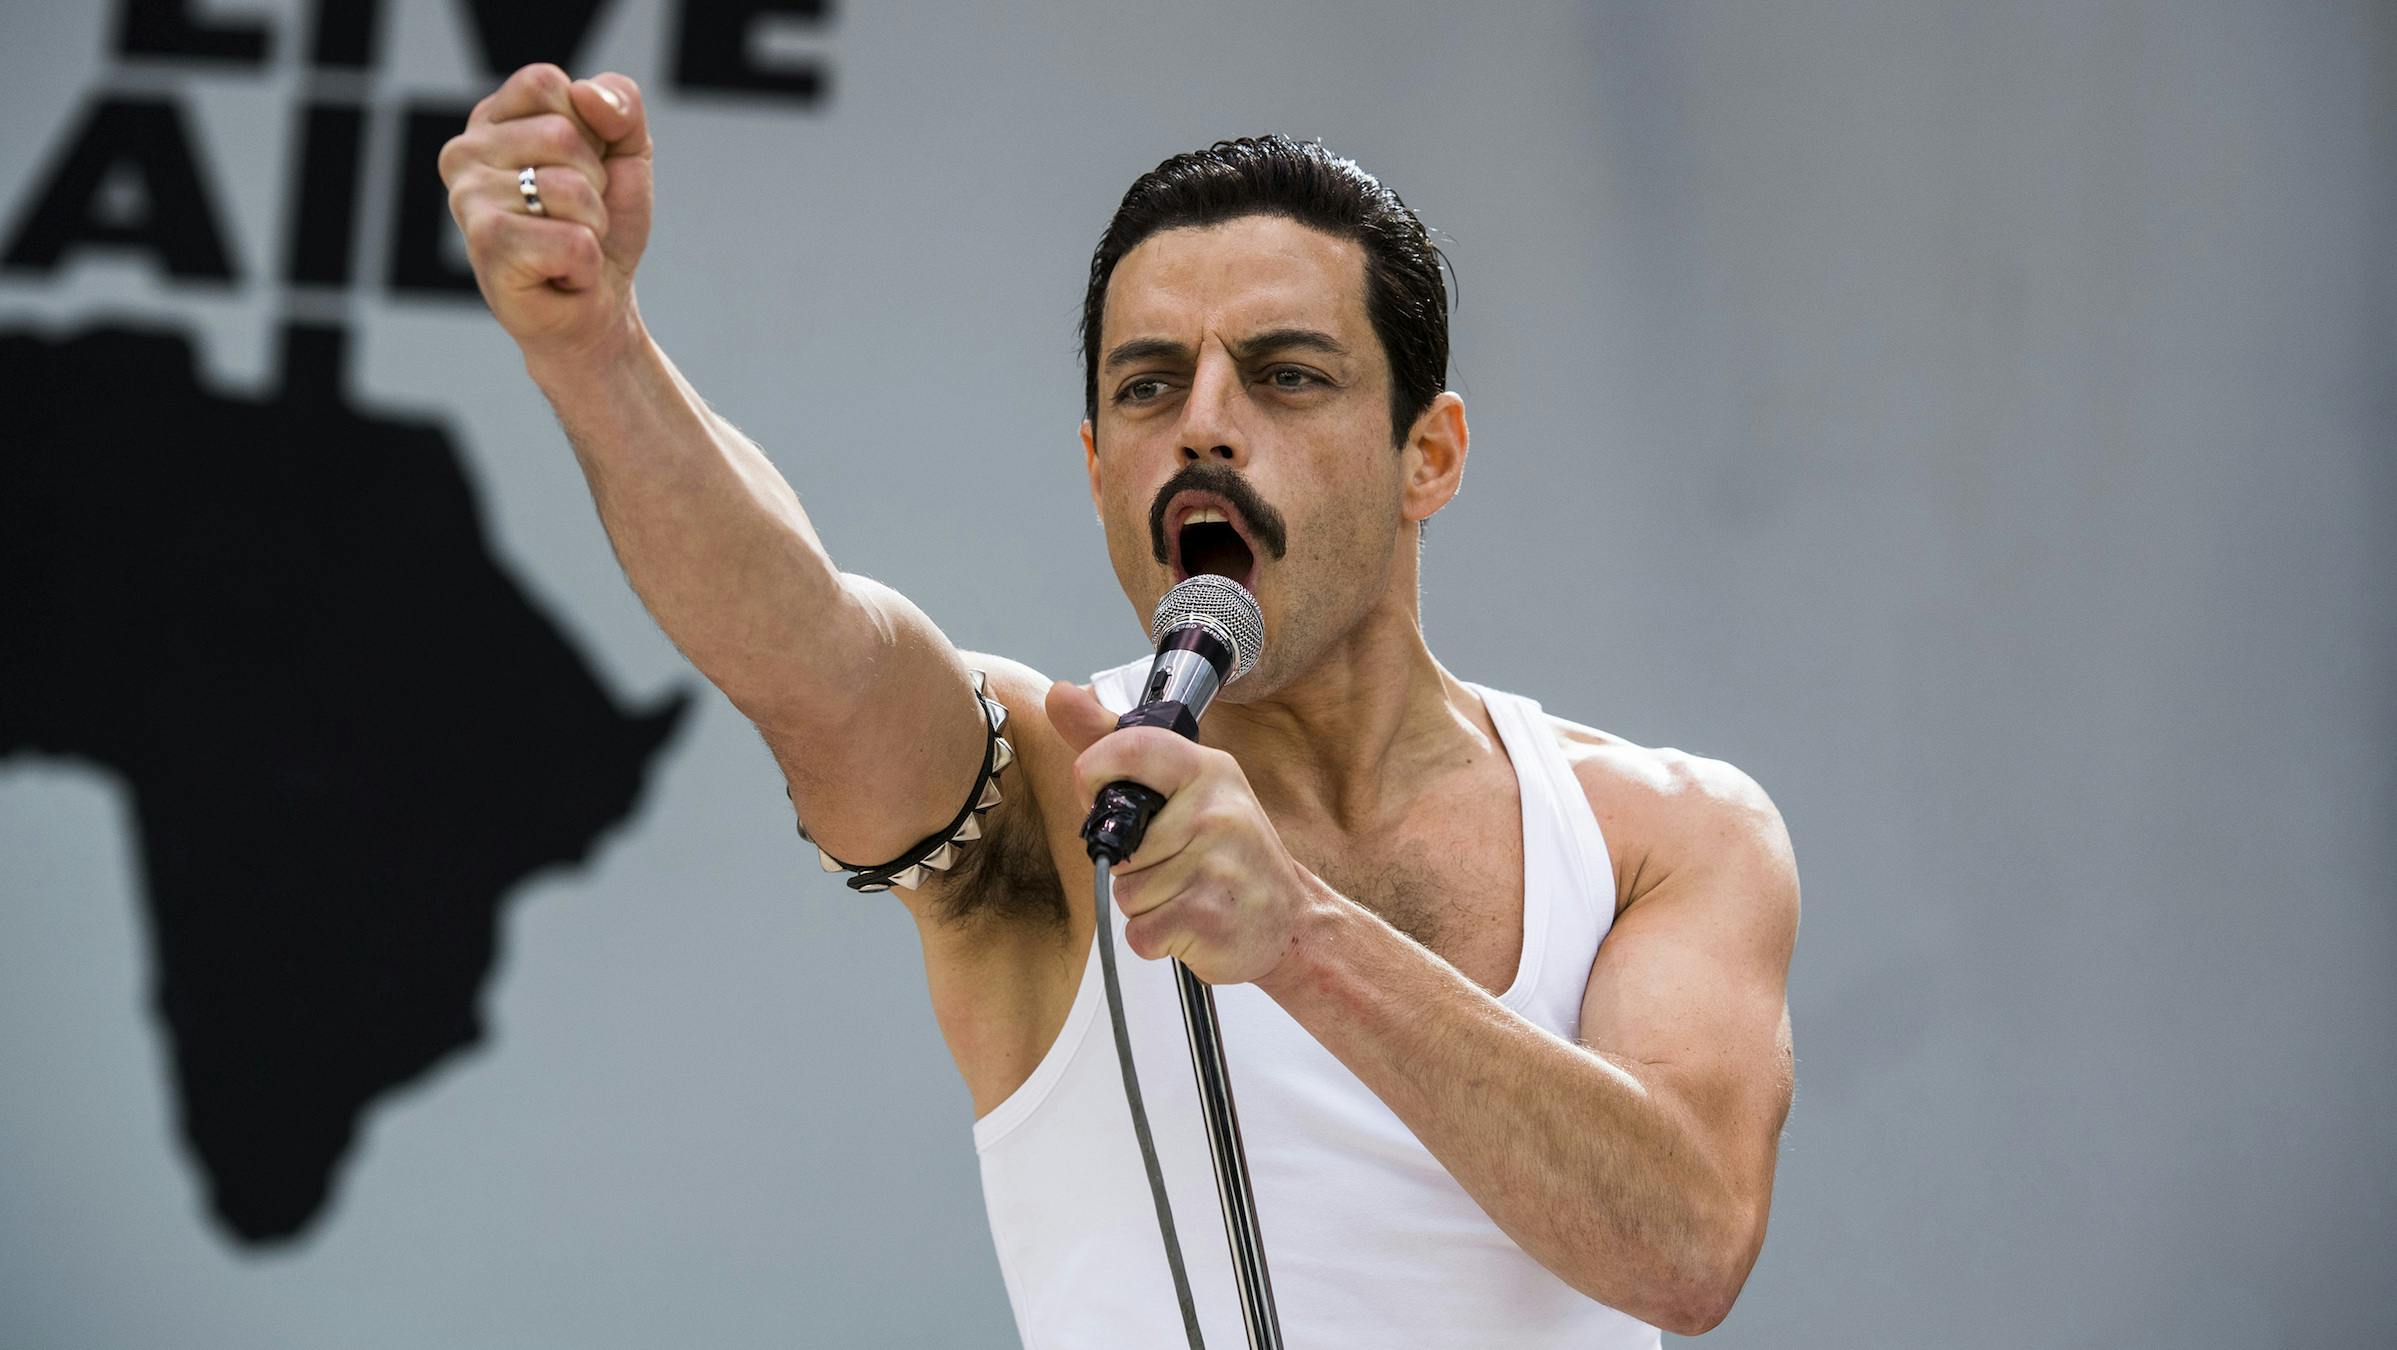 Rami Malek Wins Oscar For Portraying Freddie Mercury in Bohemian Rhapsody